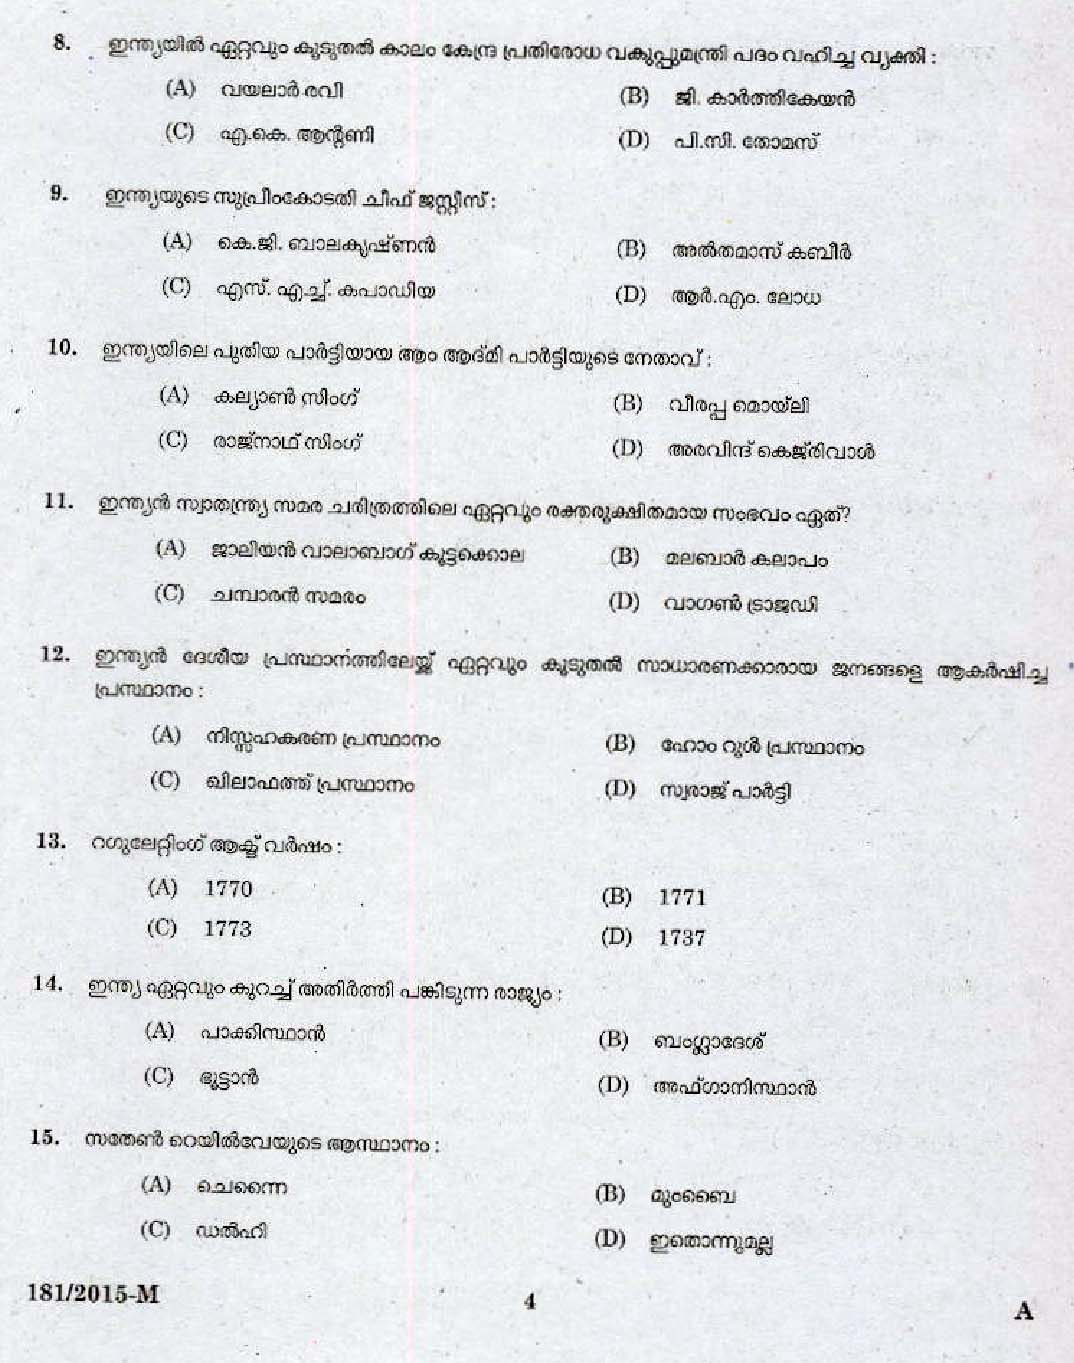 Kerala PSC Attender Exam 2015 Question Paper Code 1812015 M 2